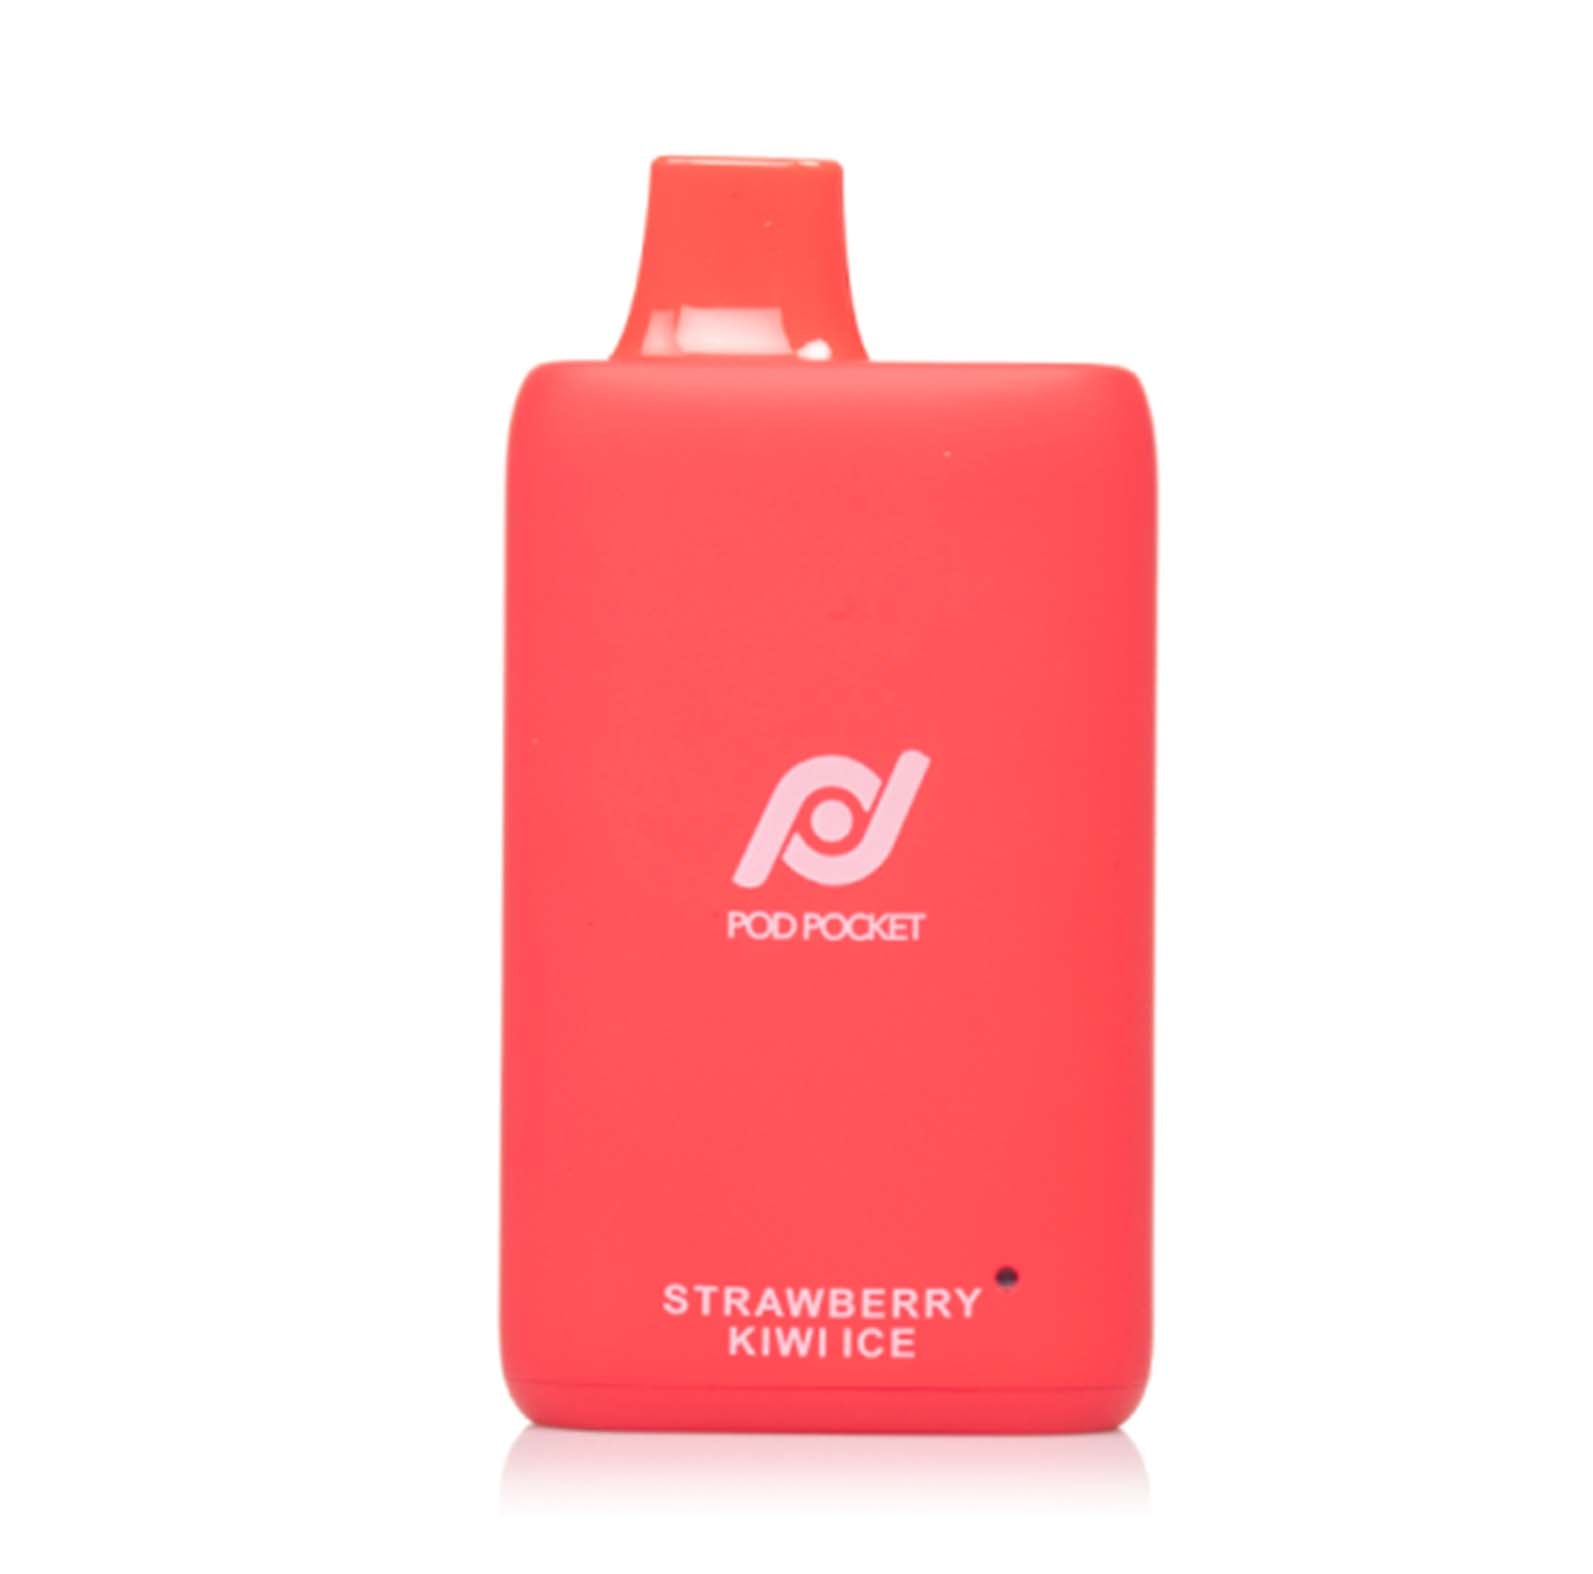 Pod Pocket 7500 Puff Disposable Vape | Strawberry Kiwi Ice 